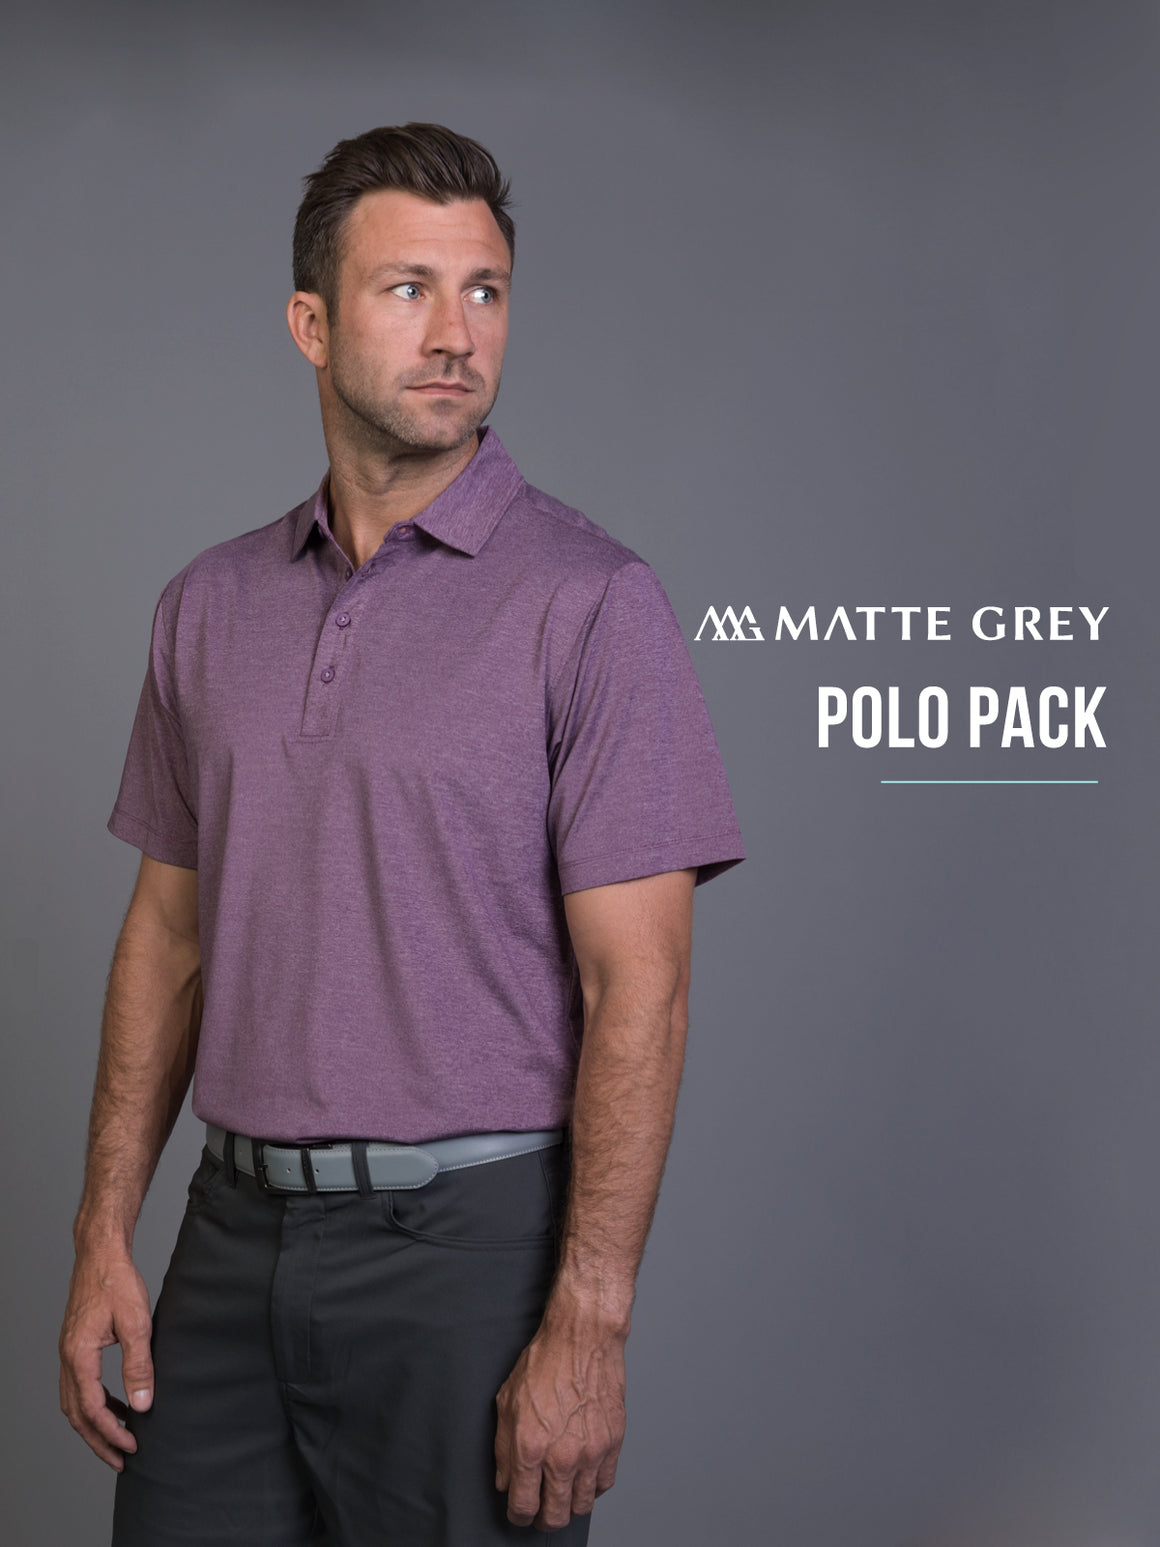 Matte Grey Polo Sample Pack Flash Sale